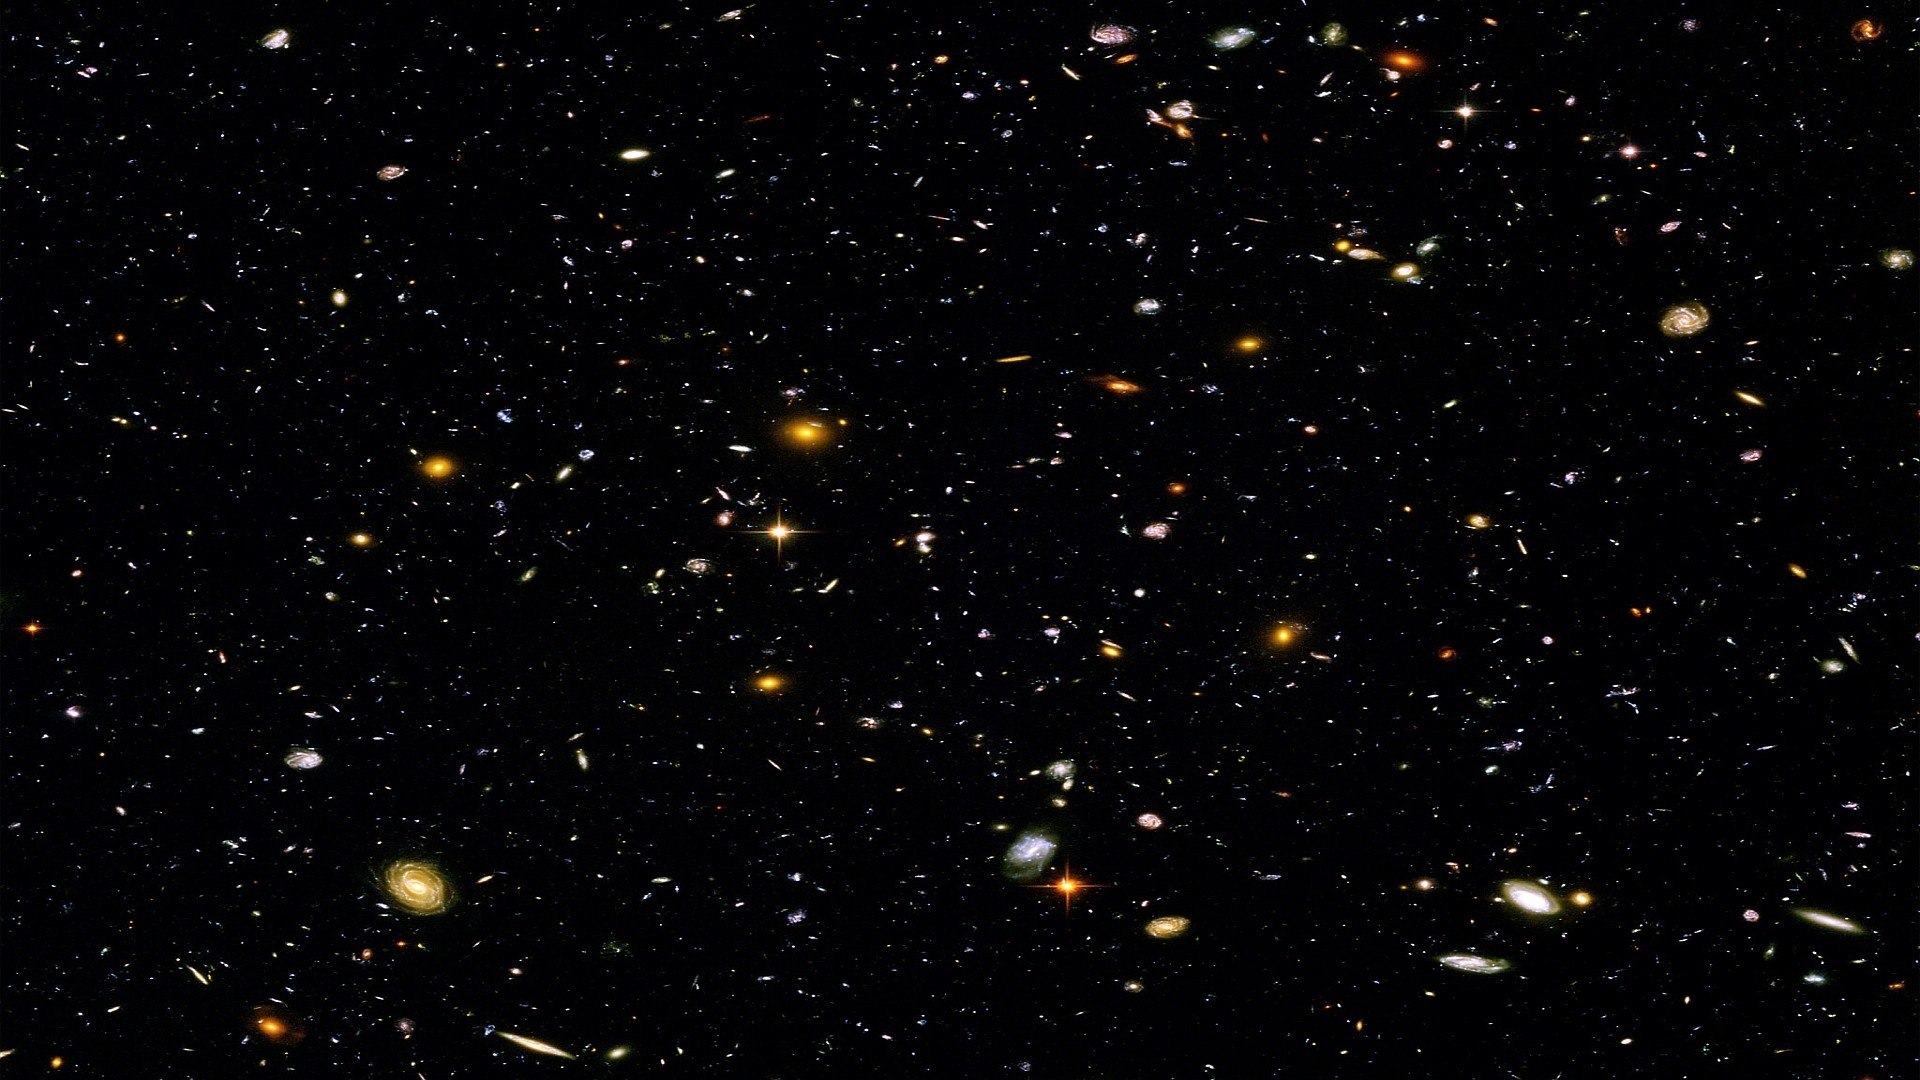 Hubble Deep Field Wallpaper - WallpaperSafari